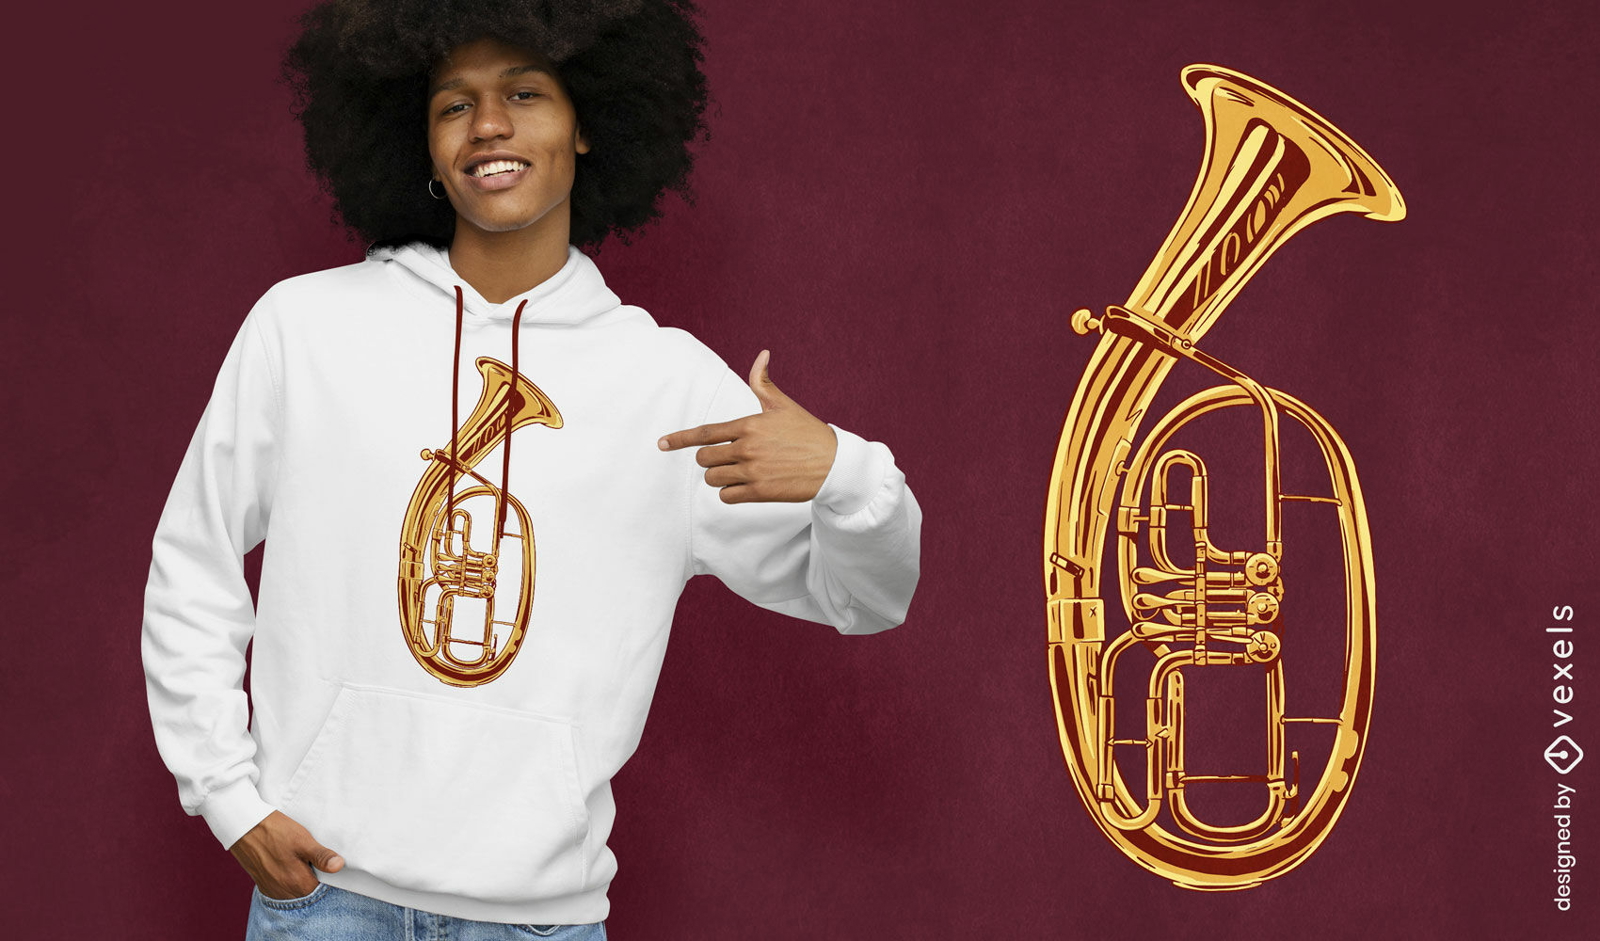 Diseño de camiseta de instrumento musical tenorhorn.